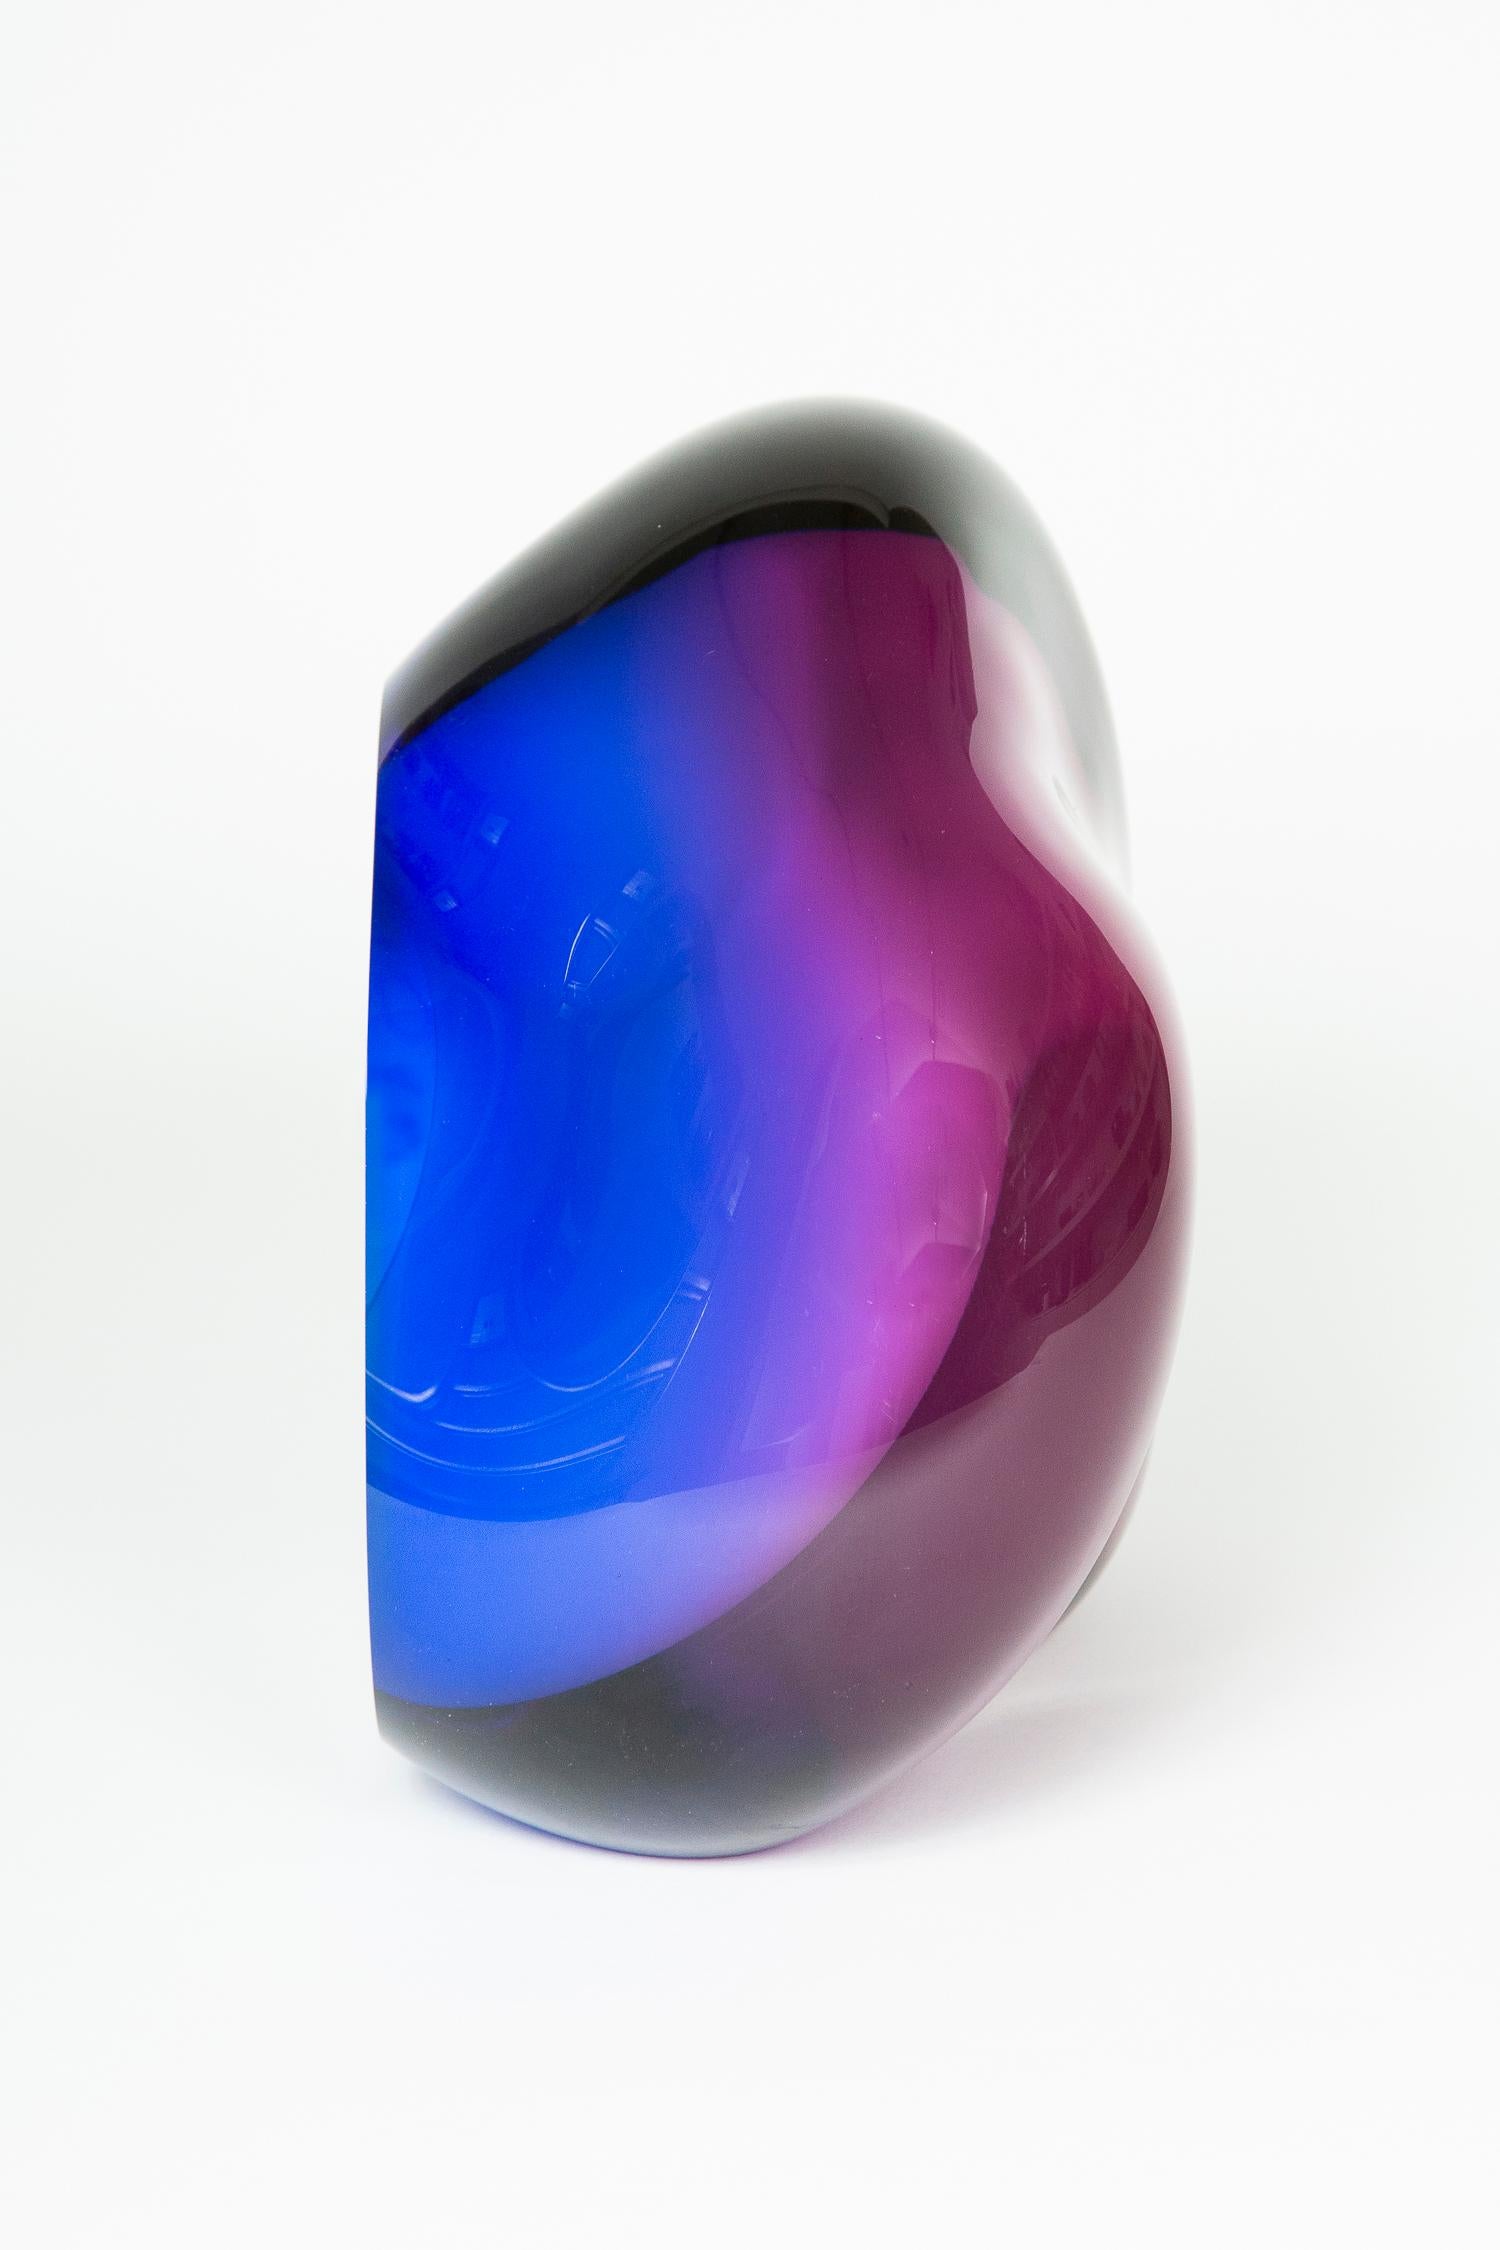 Modern Chromatic Vug in Blue and Fuchsia Unique Glass Sculpture by Samantha Donaldson